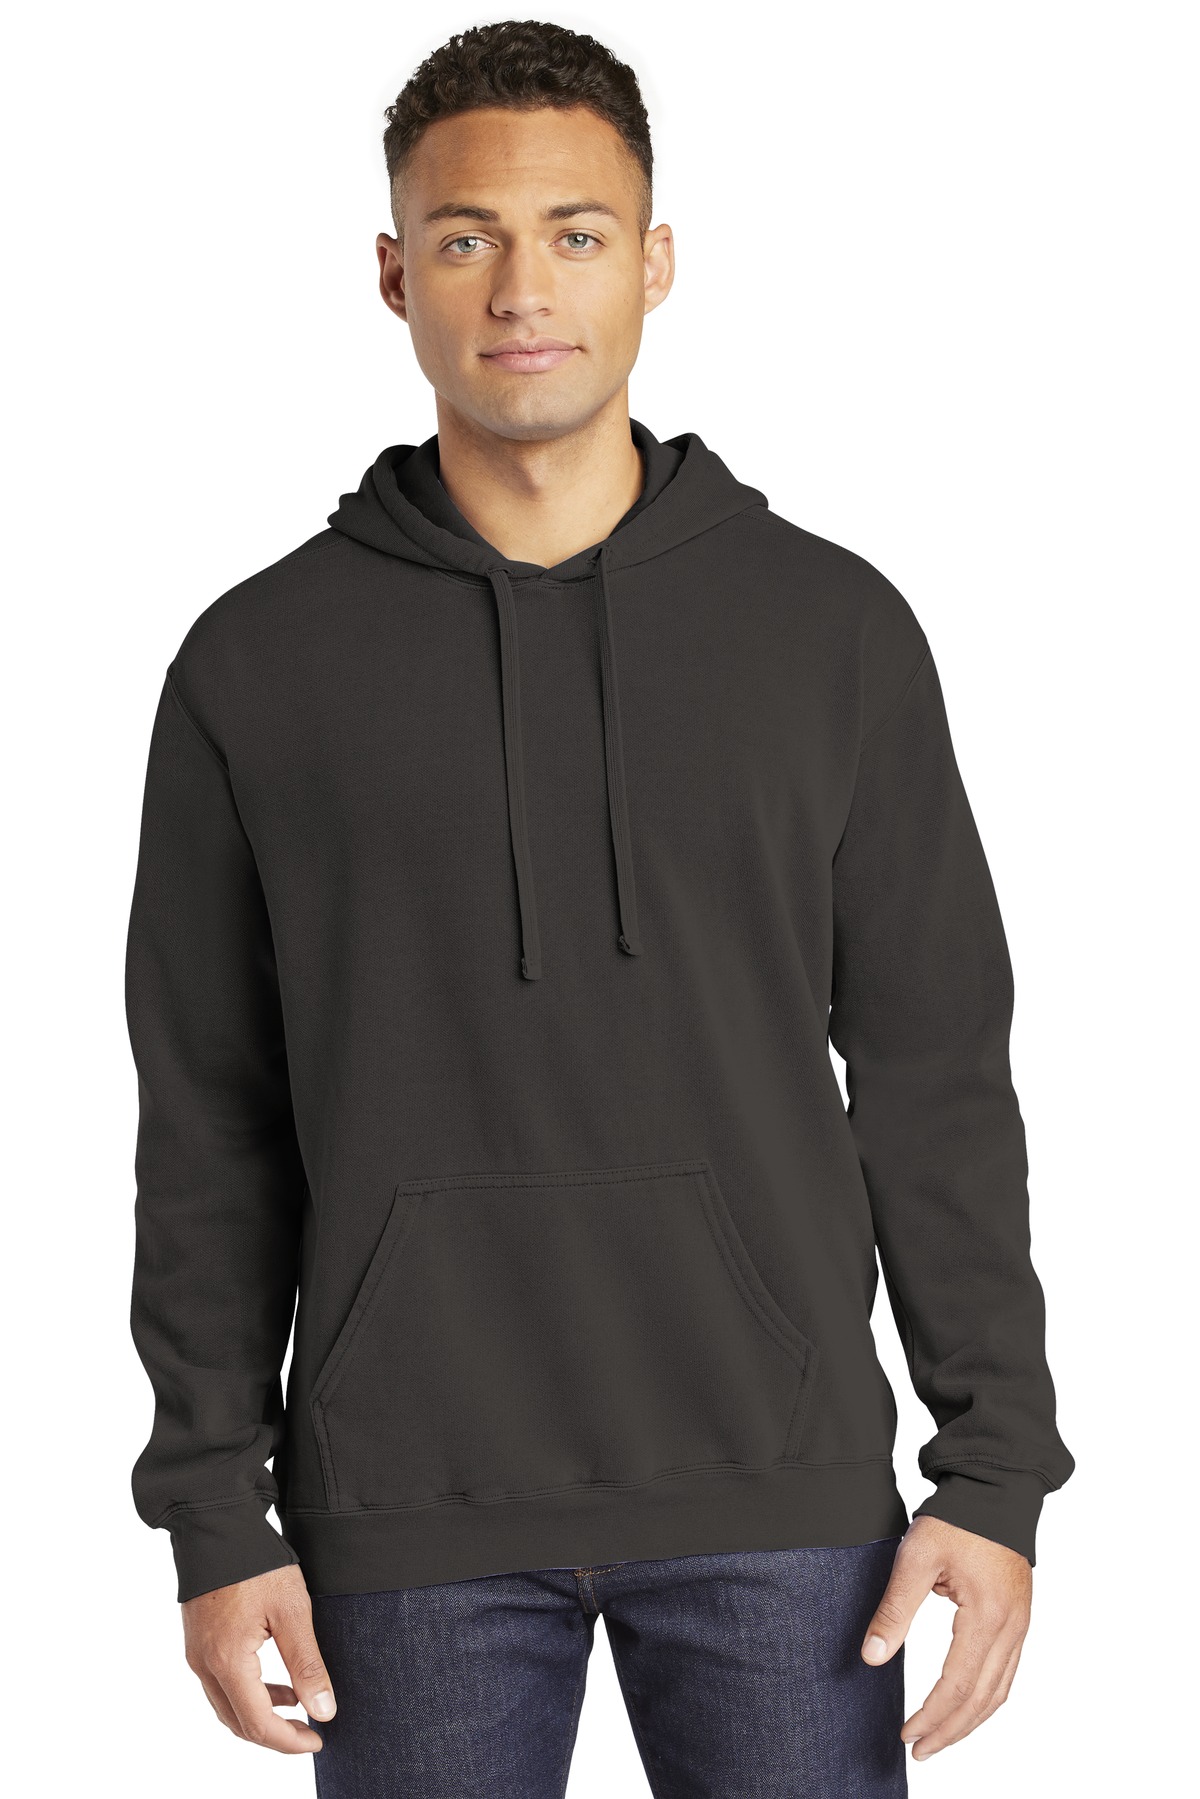 COMFORT COLORS ® Ring Spun Hooded Sweatshirt. 1567 - Custom Shirt Shop